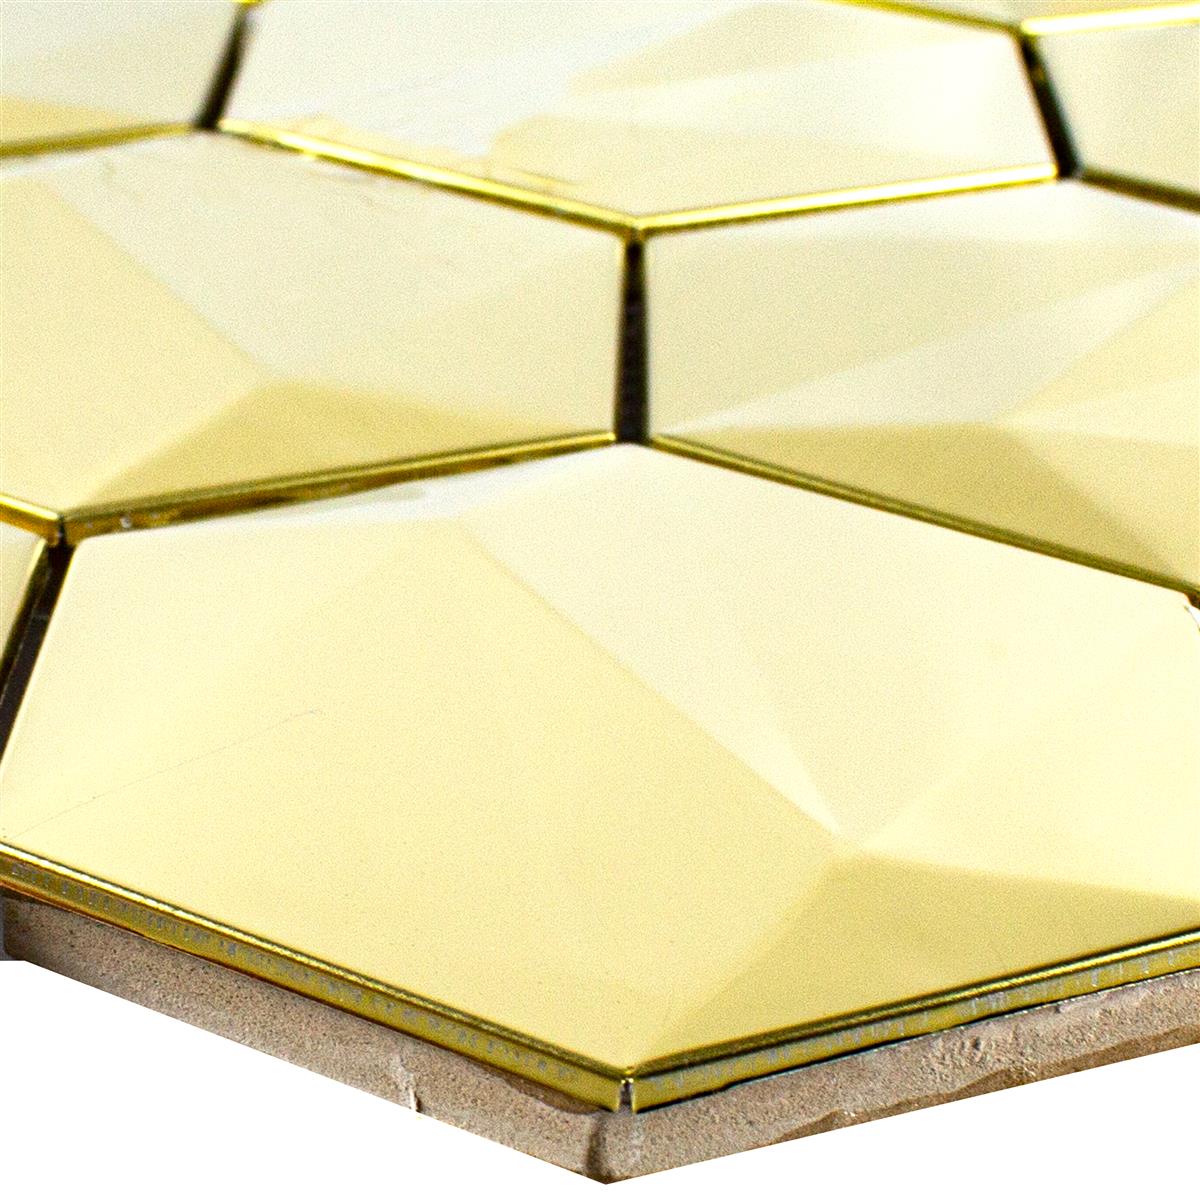 Metallo Mosaico Durango Esagono 3D Oro